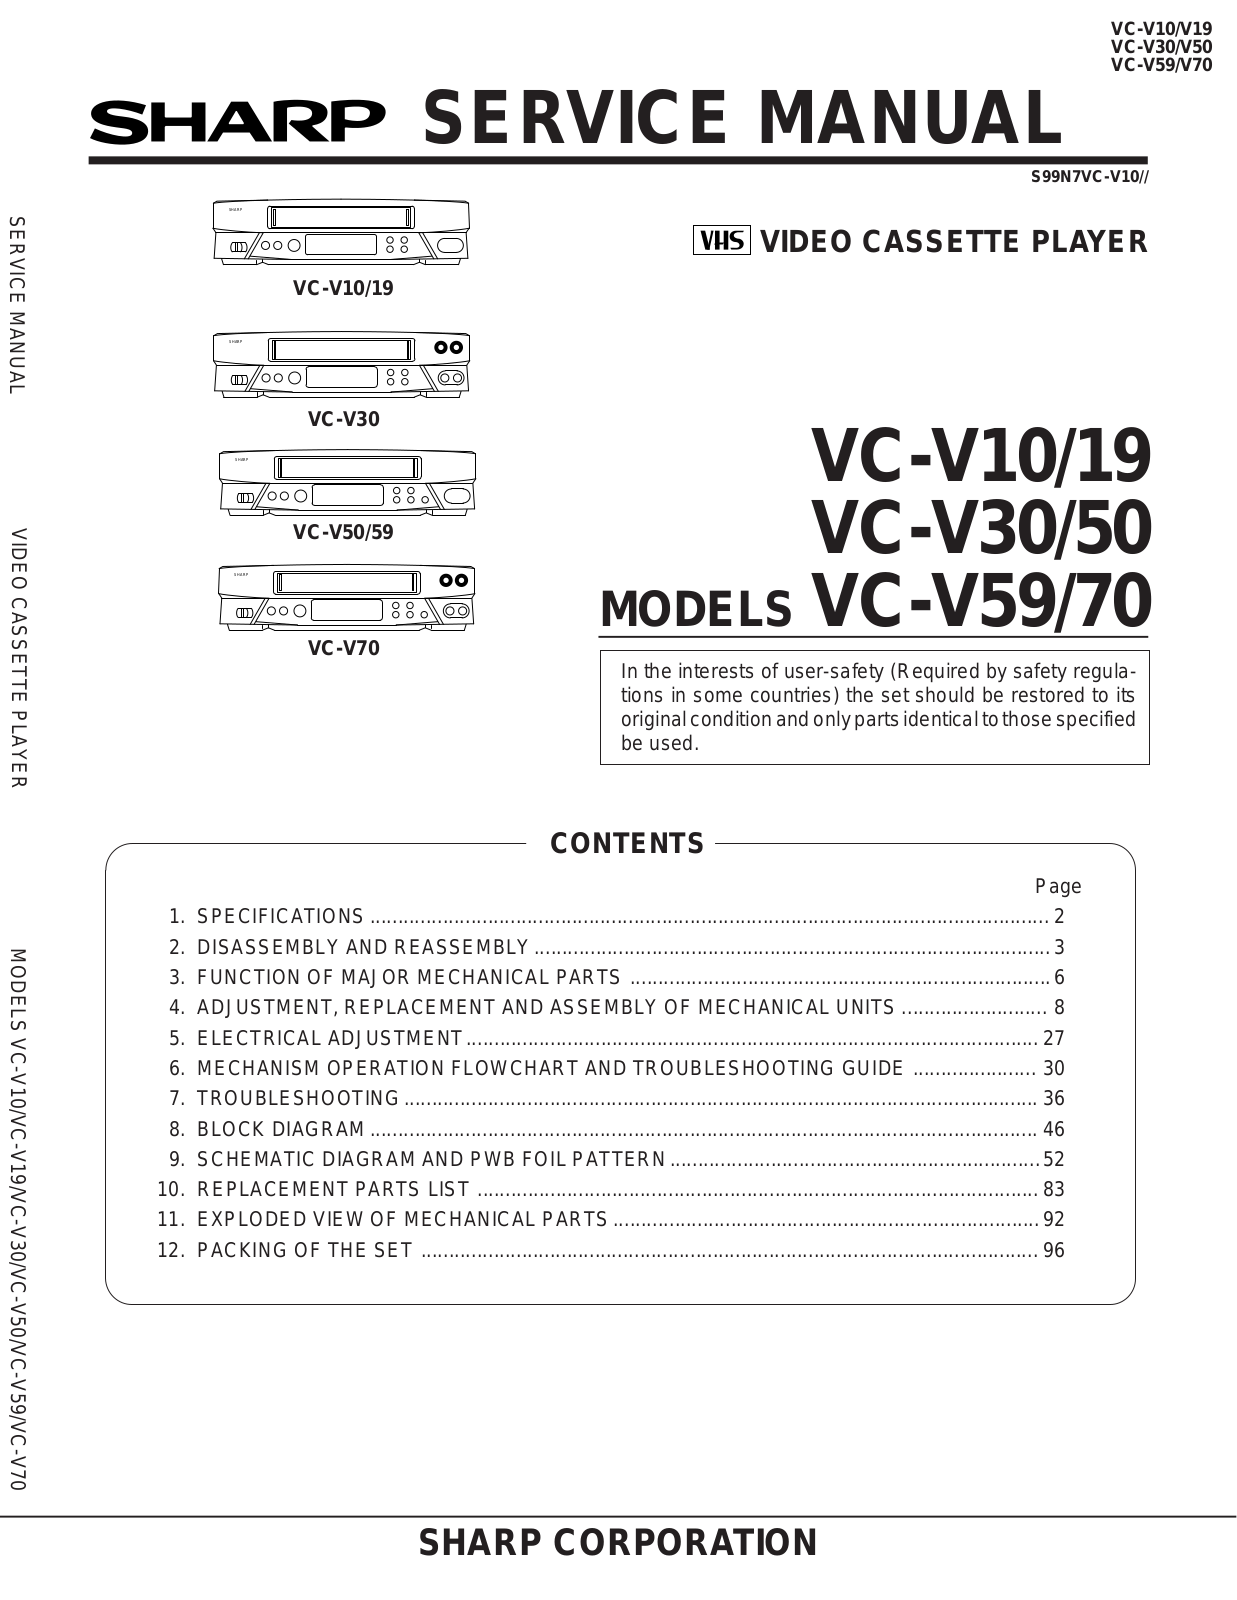 SHARP VC-V10/19, VC-V30/50, VC-V59/70 Service Manual